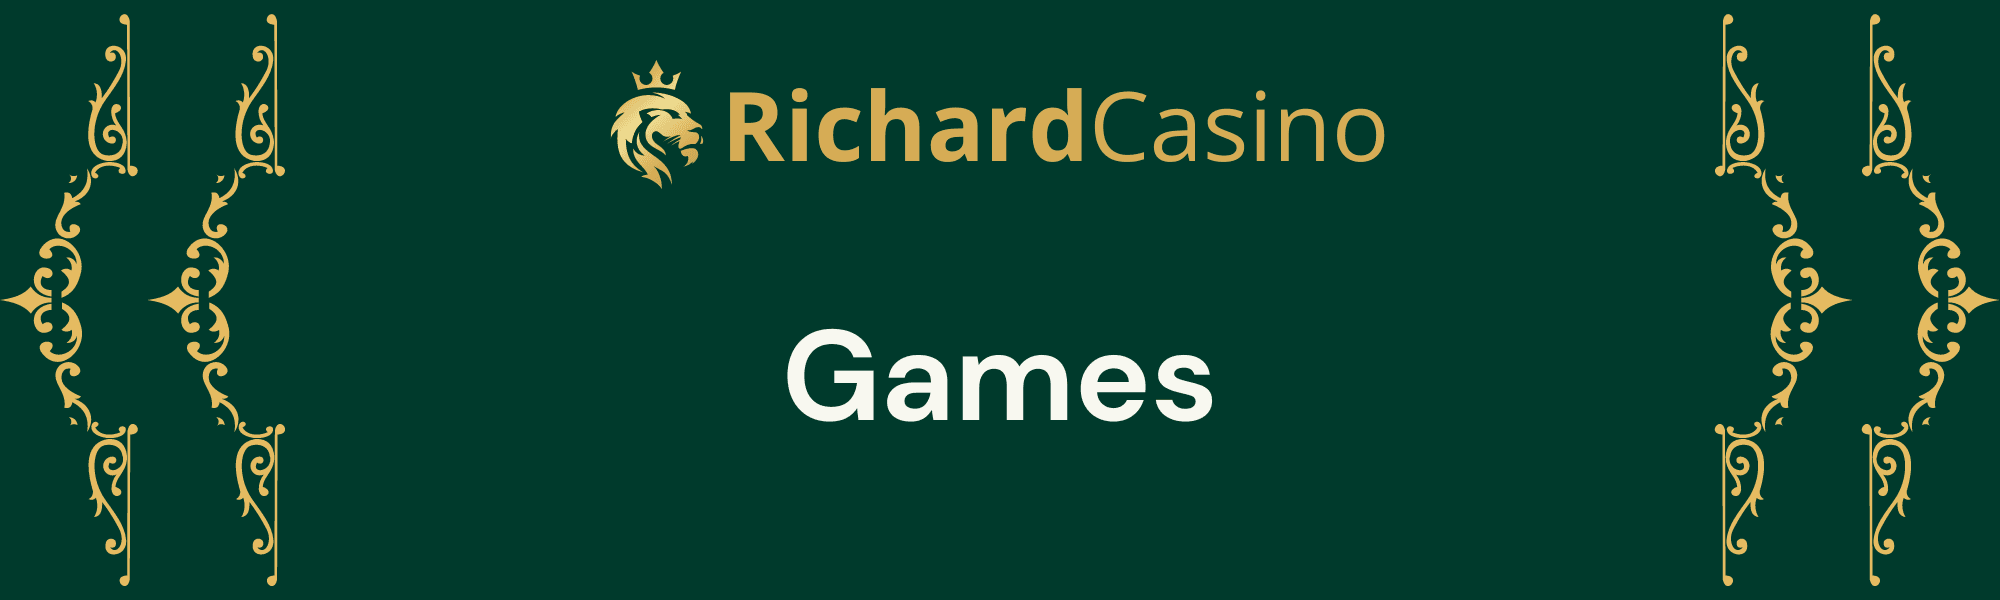 Richard Casino Games.png